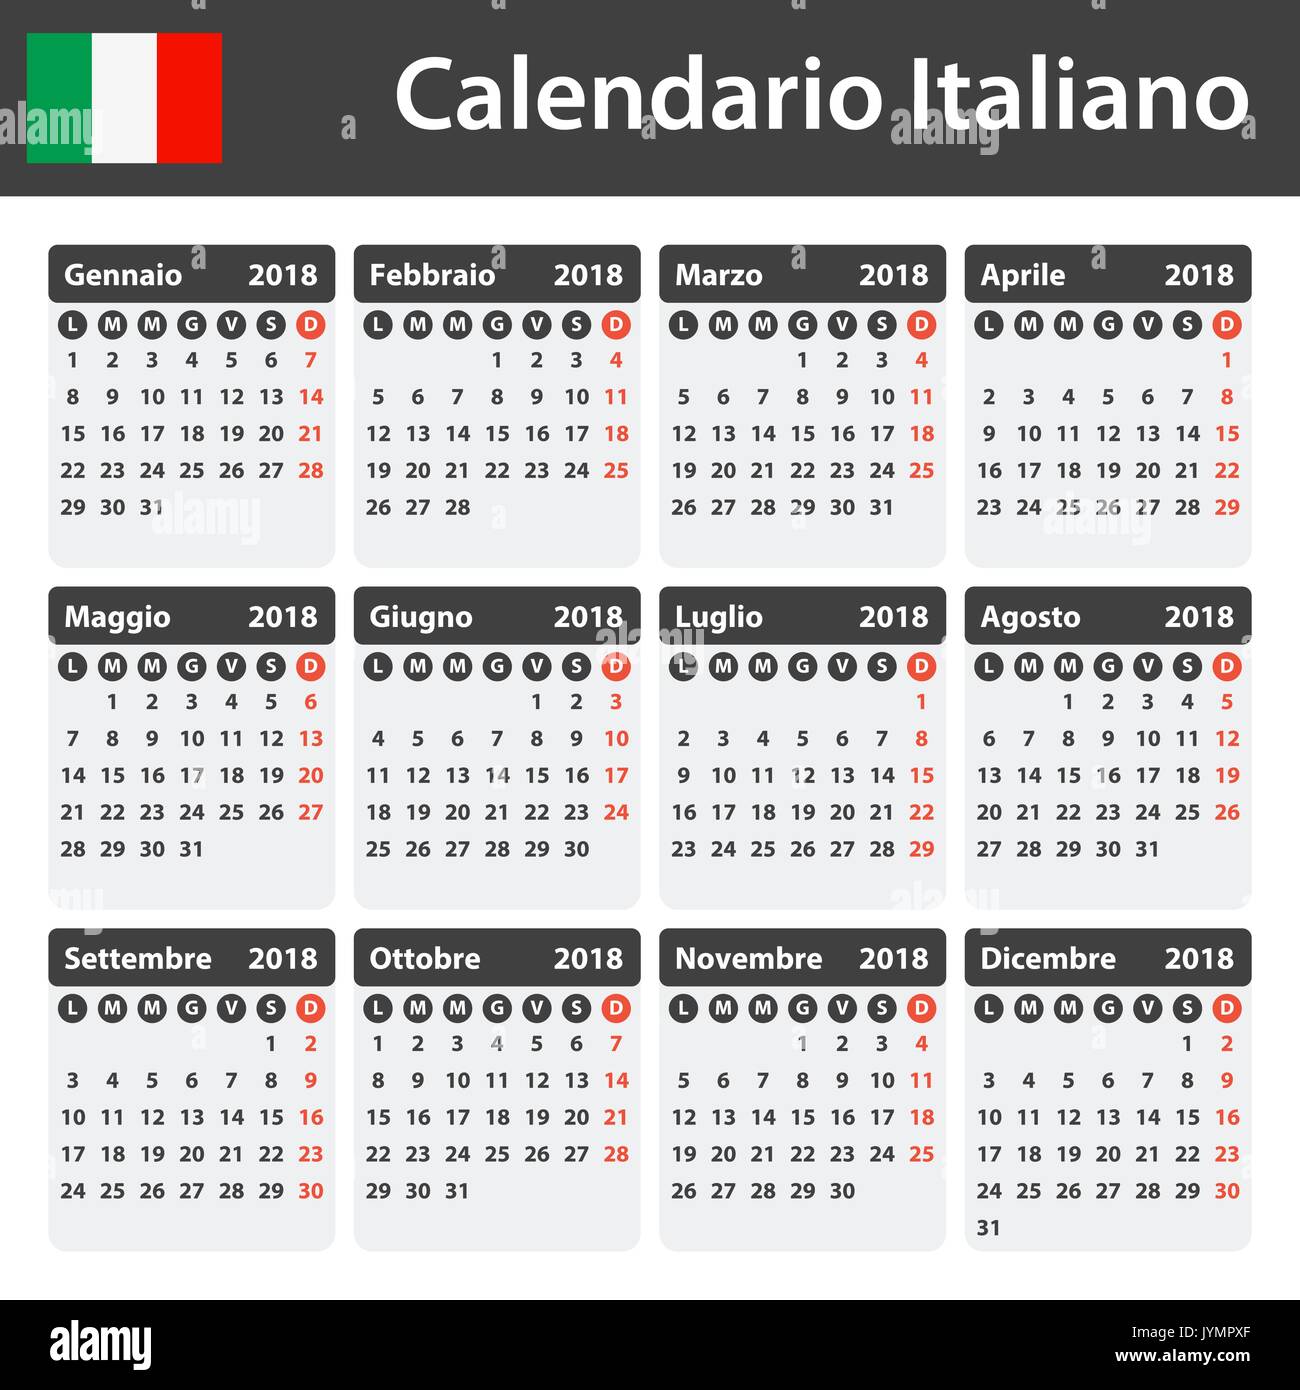 Italian Calendar for 2018. Scheduler, agenda or diary template. Week